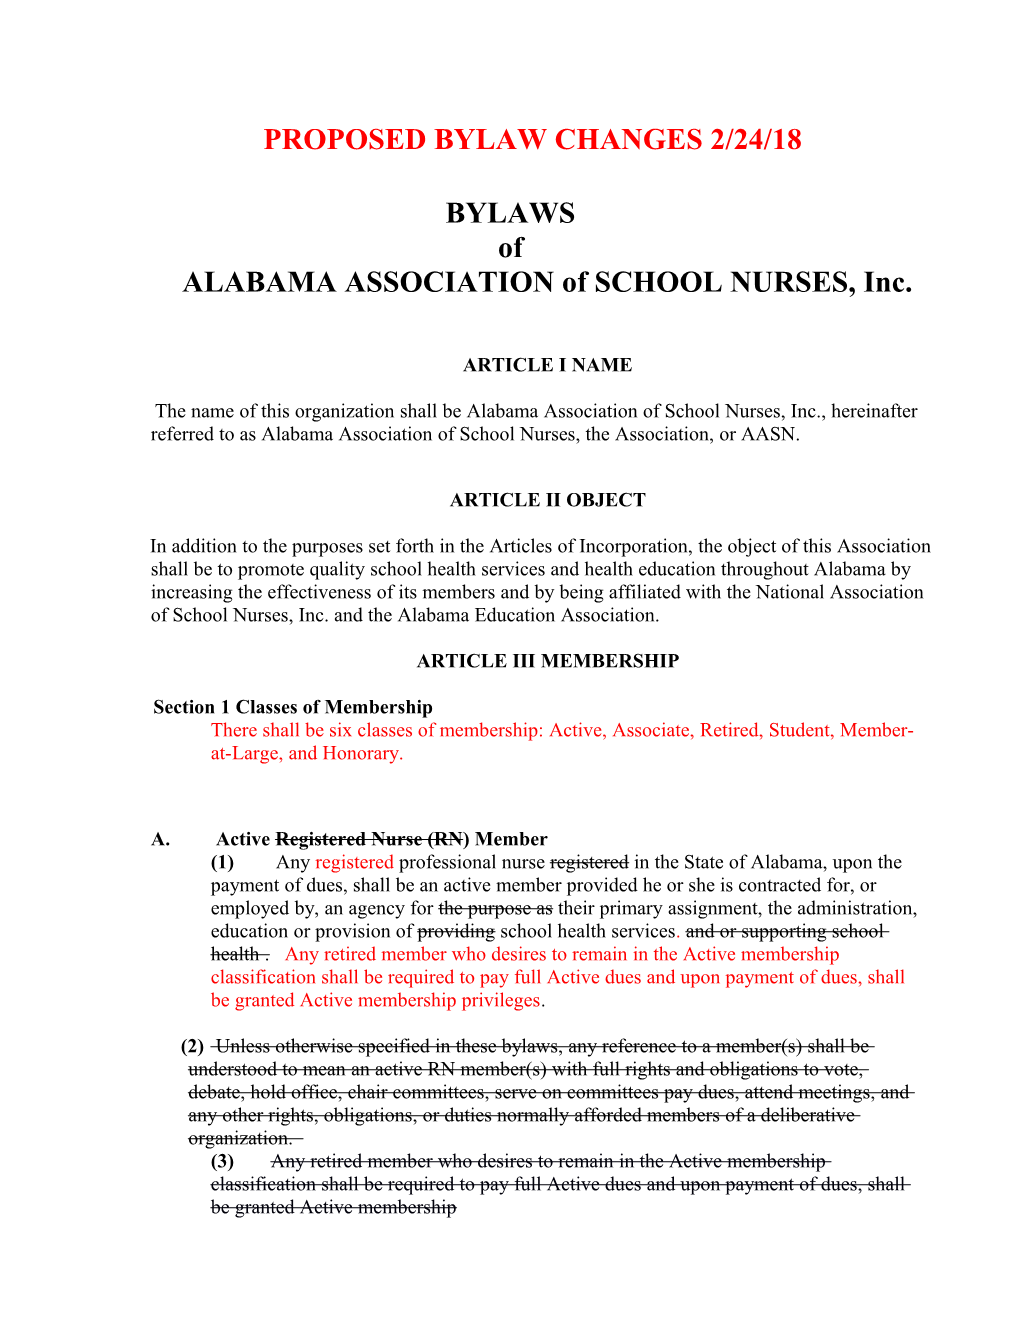 ALABAMA ASSOCIATION of SCHOOL NURSES, Inc